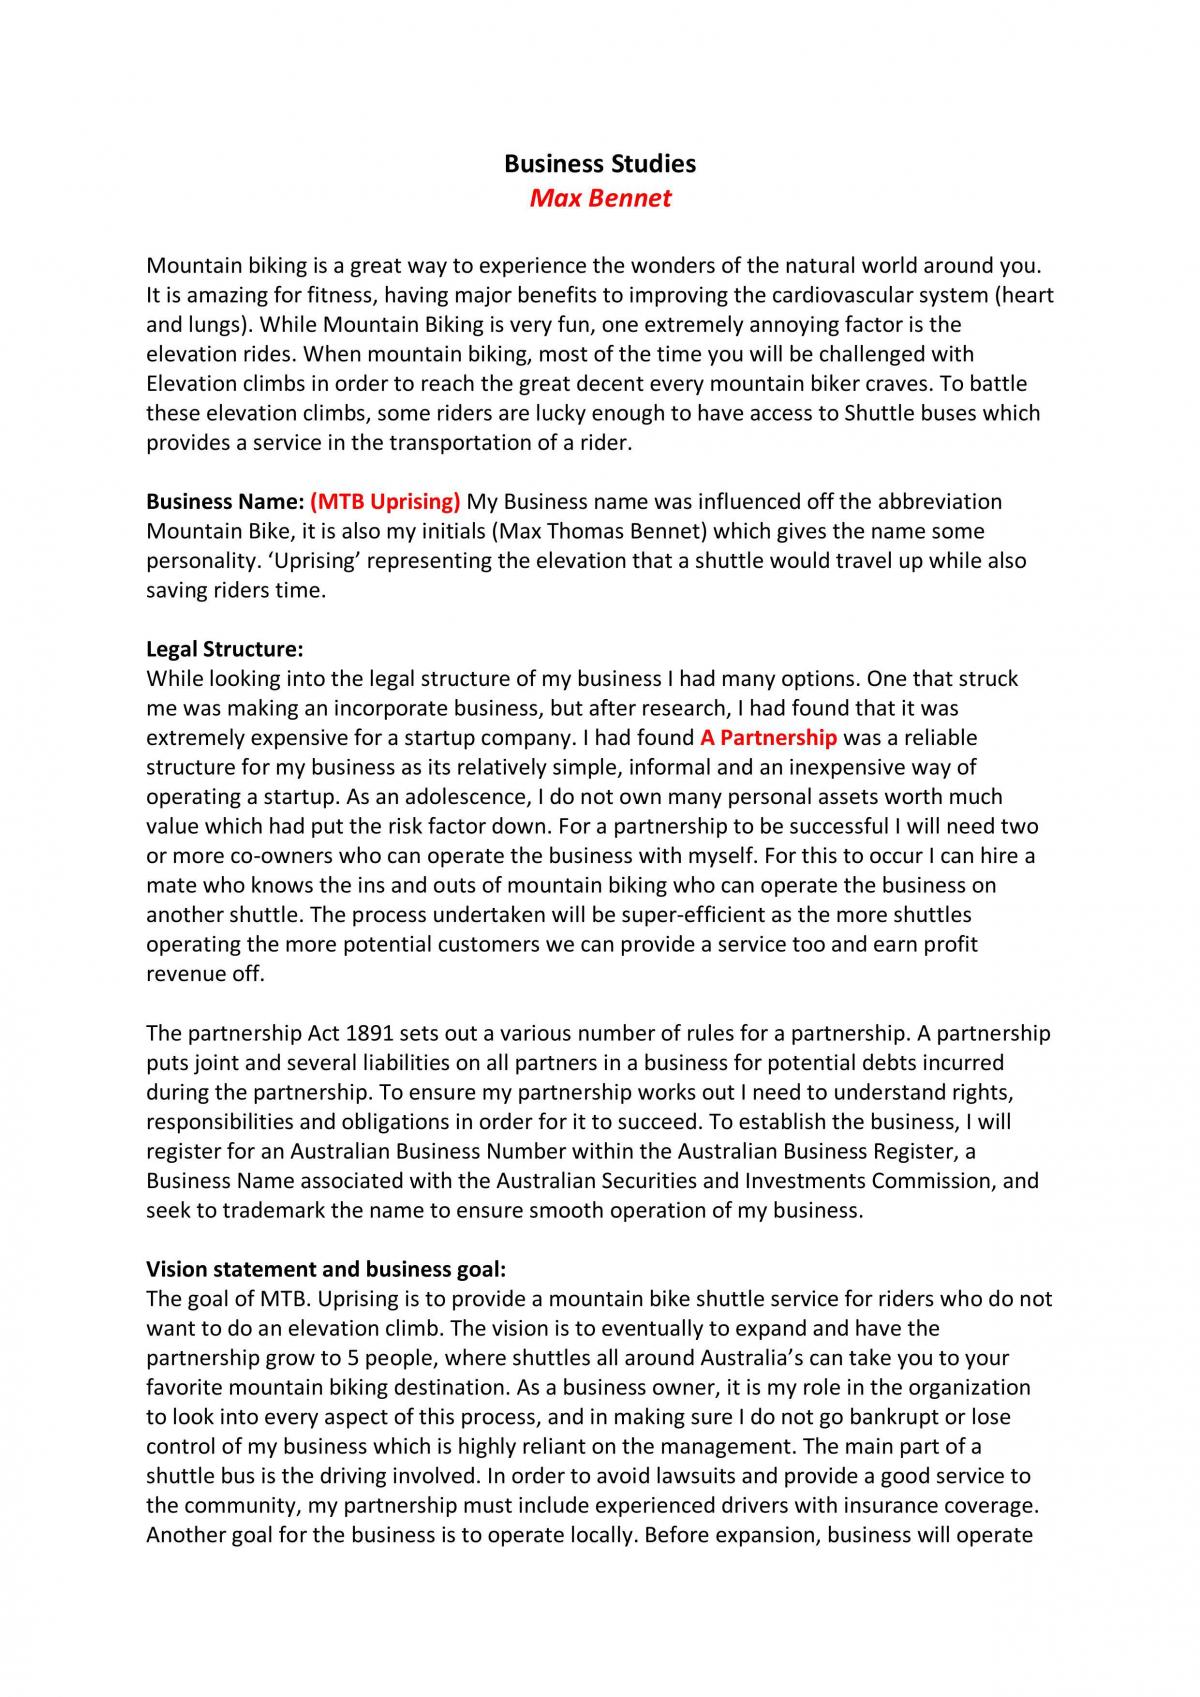 Business Case Study - MTB Uprising | Business Studies - Year 11 HSC ...